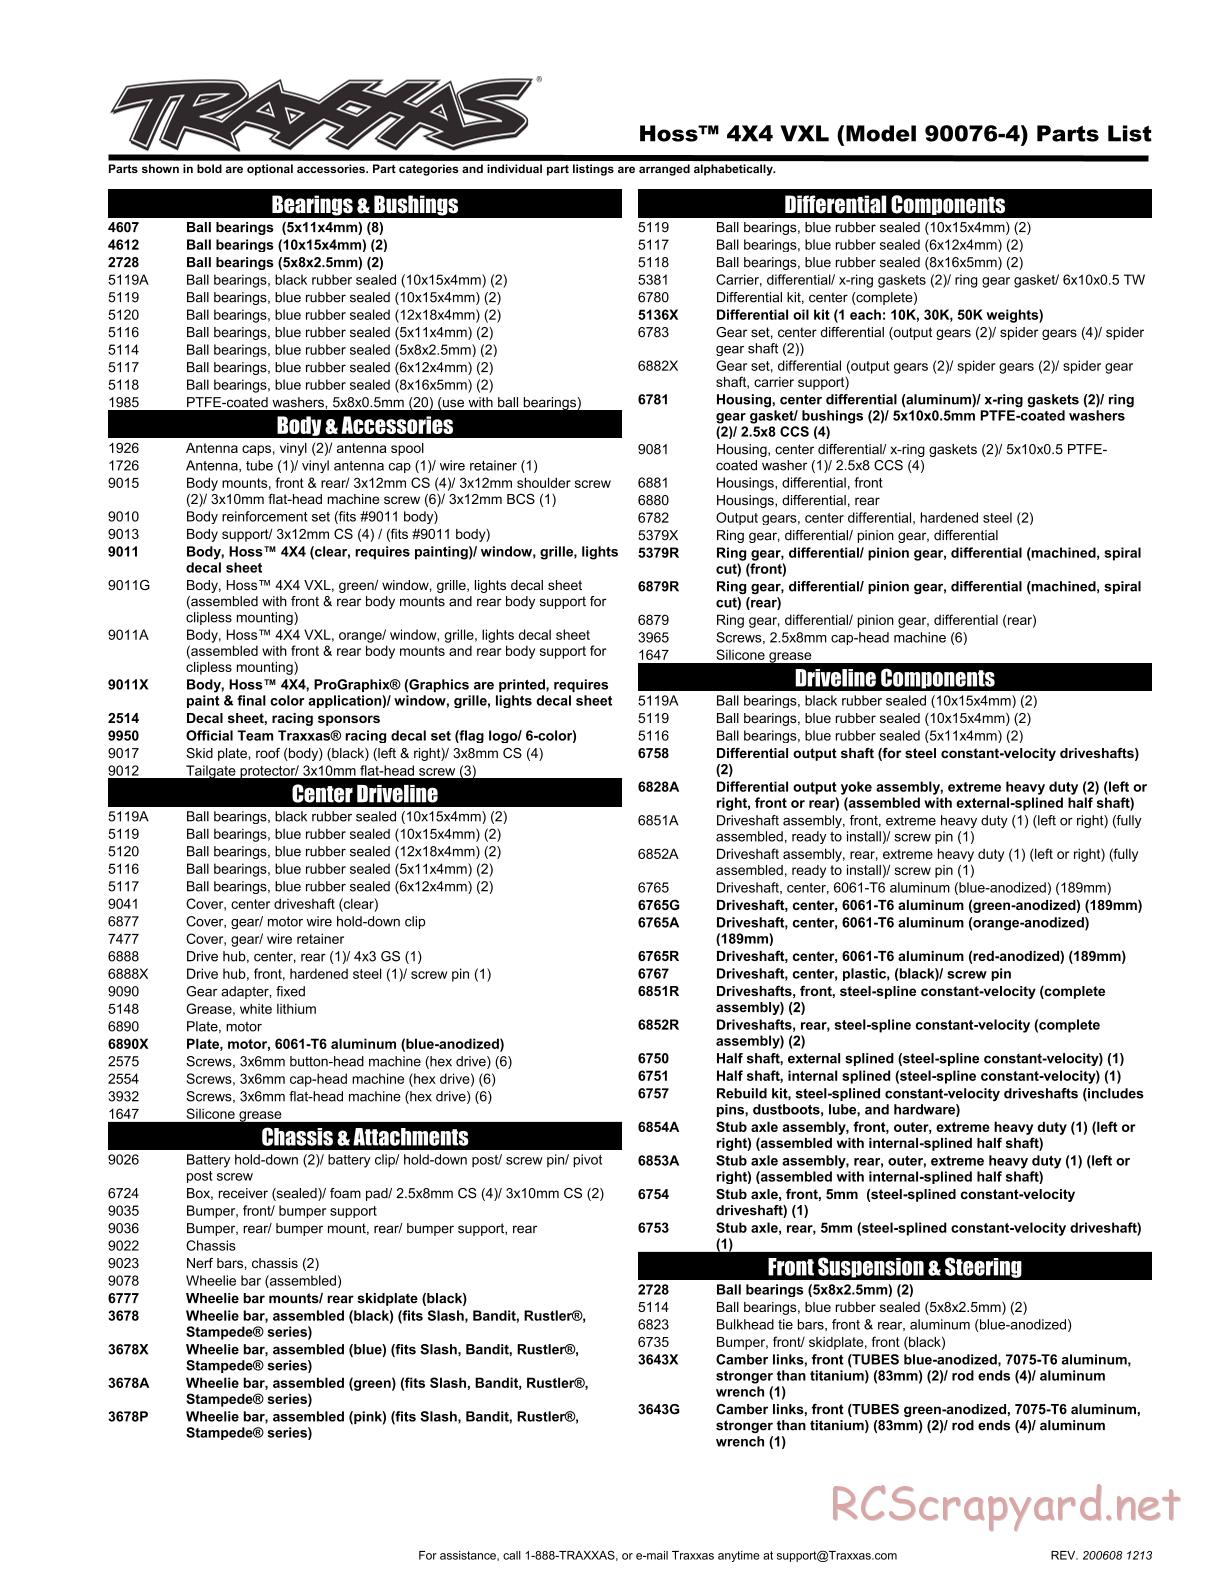 Traxxas - Hoss 4x4 VXL (2020) - Parts List - Page 1